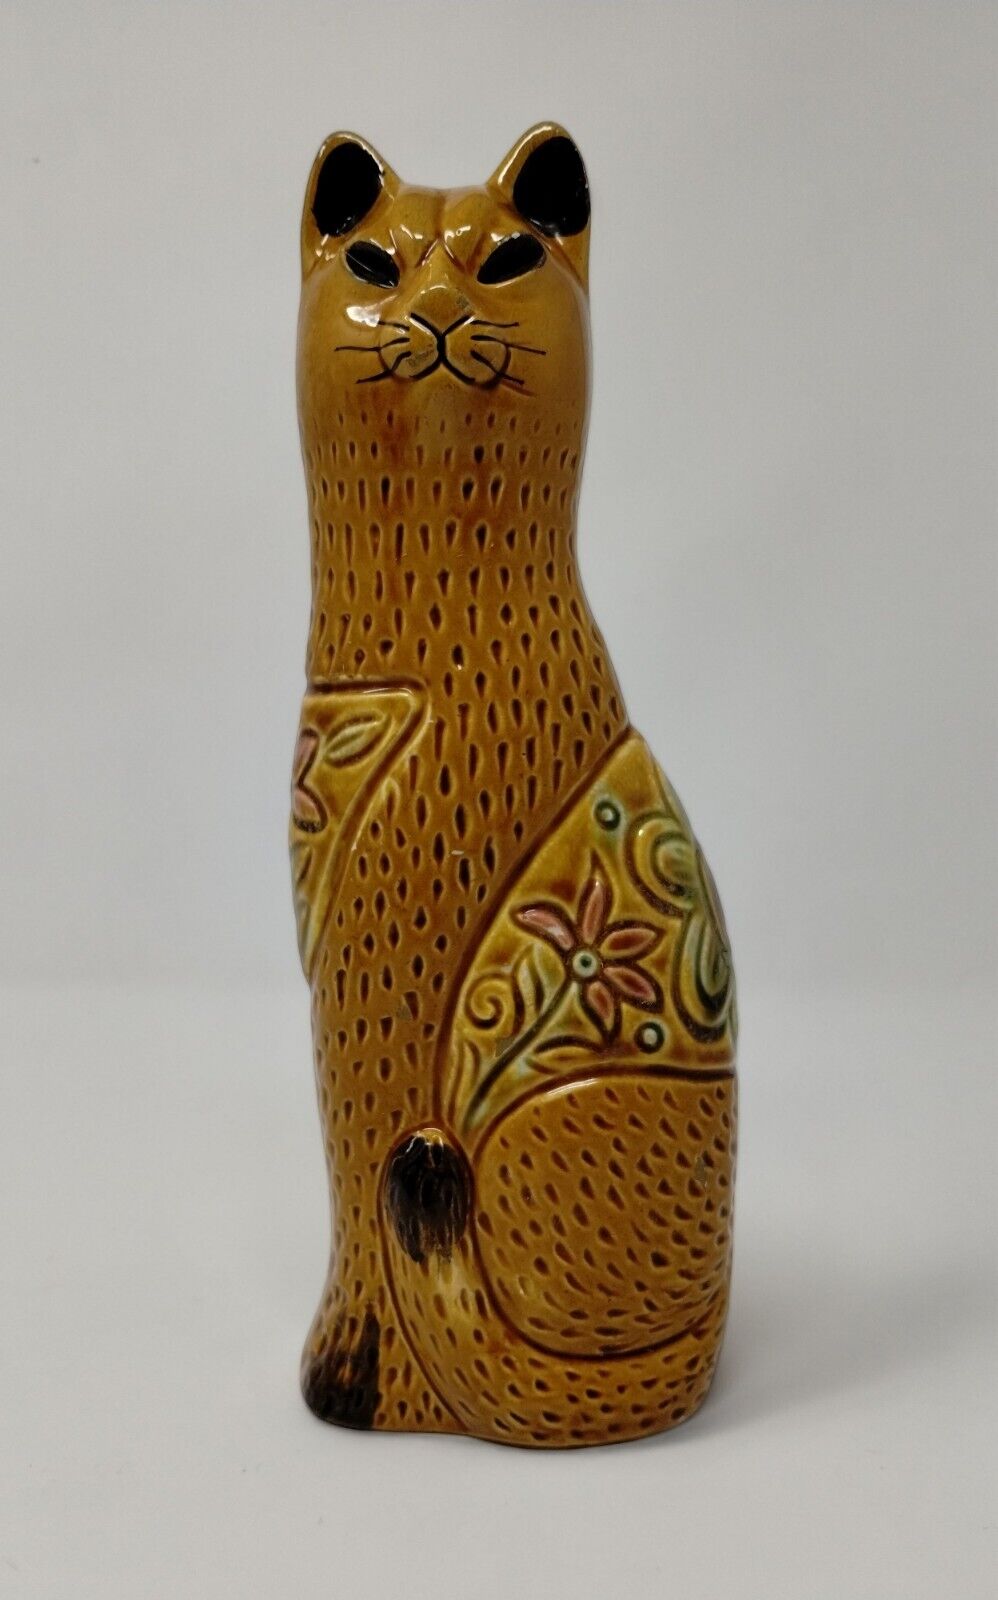 VTG Tall Cat Figurine Siamese Butterscotch Flower Child Ceramic 70's Whimsical